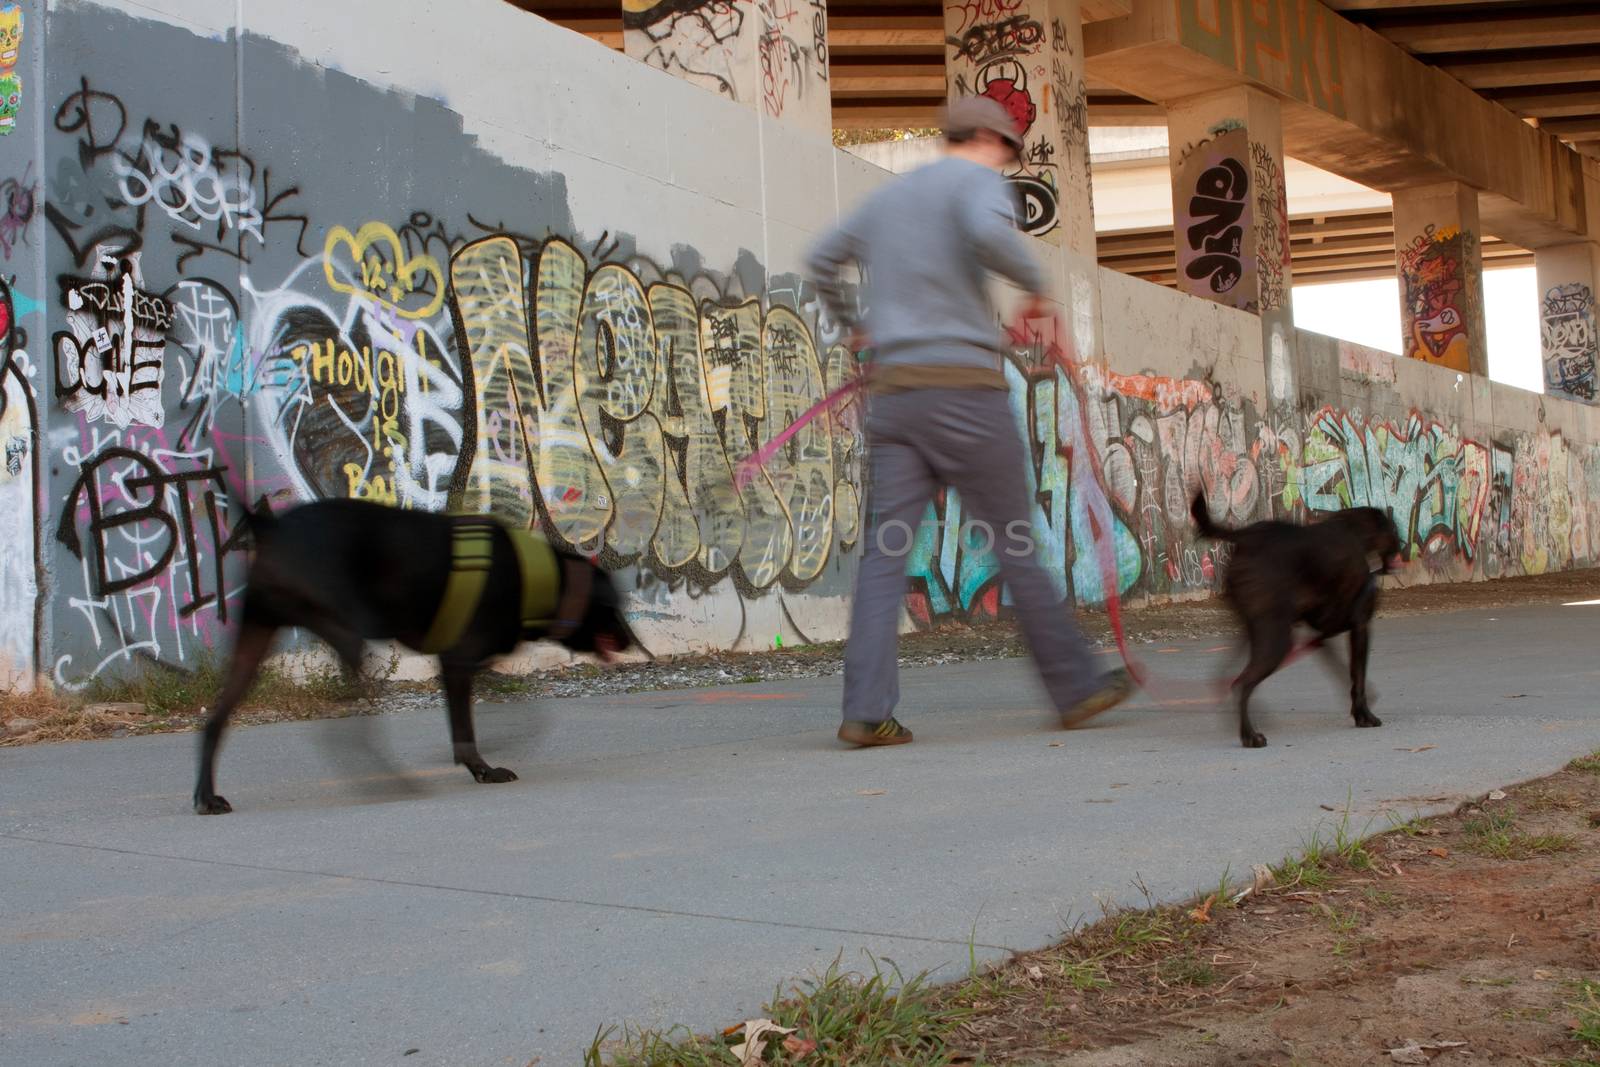 Motion Blur Of Man Walking Two Dogs In Urban Setting by BluIz60